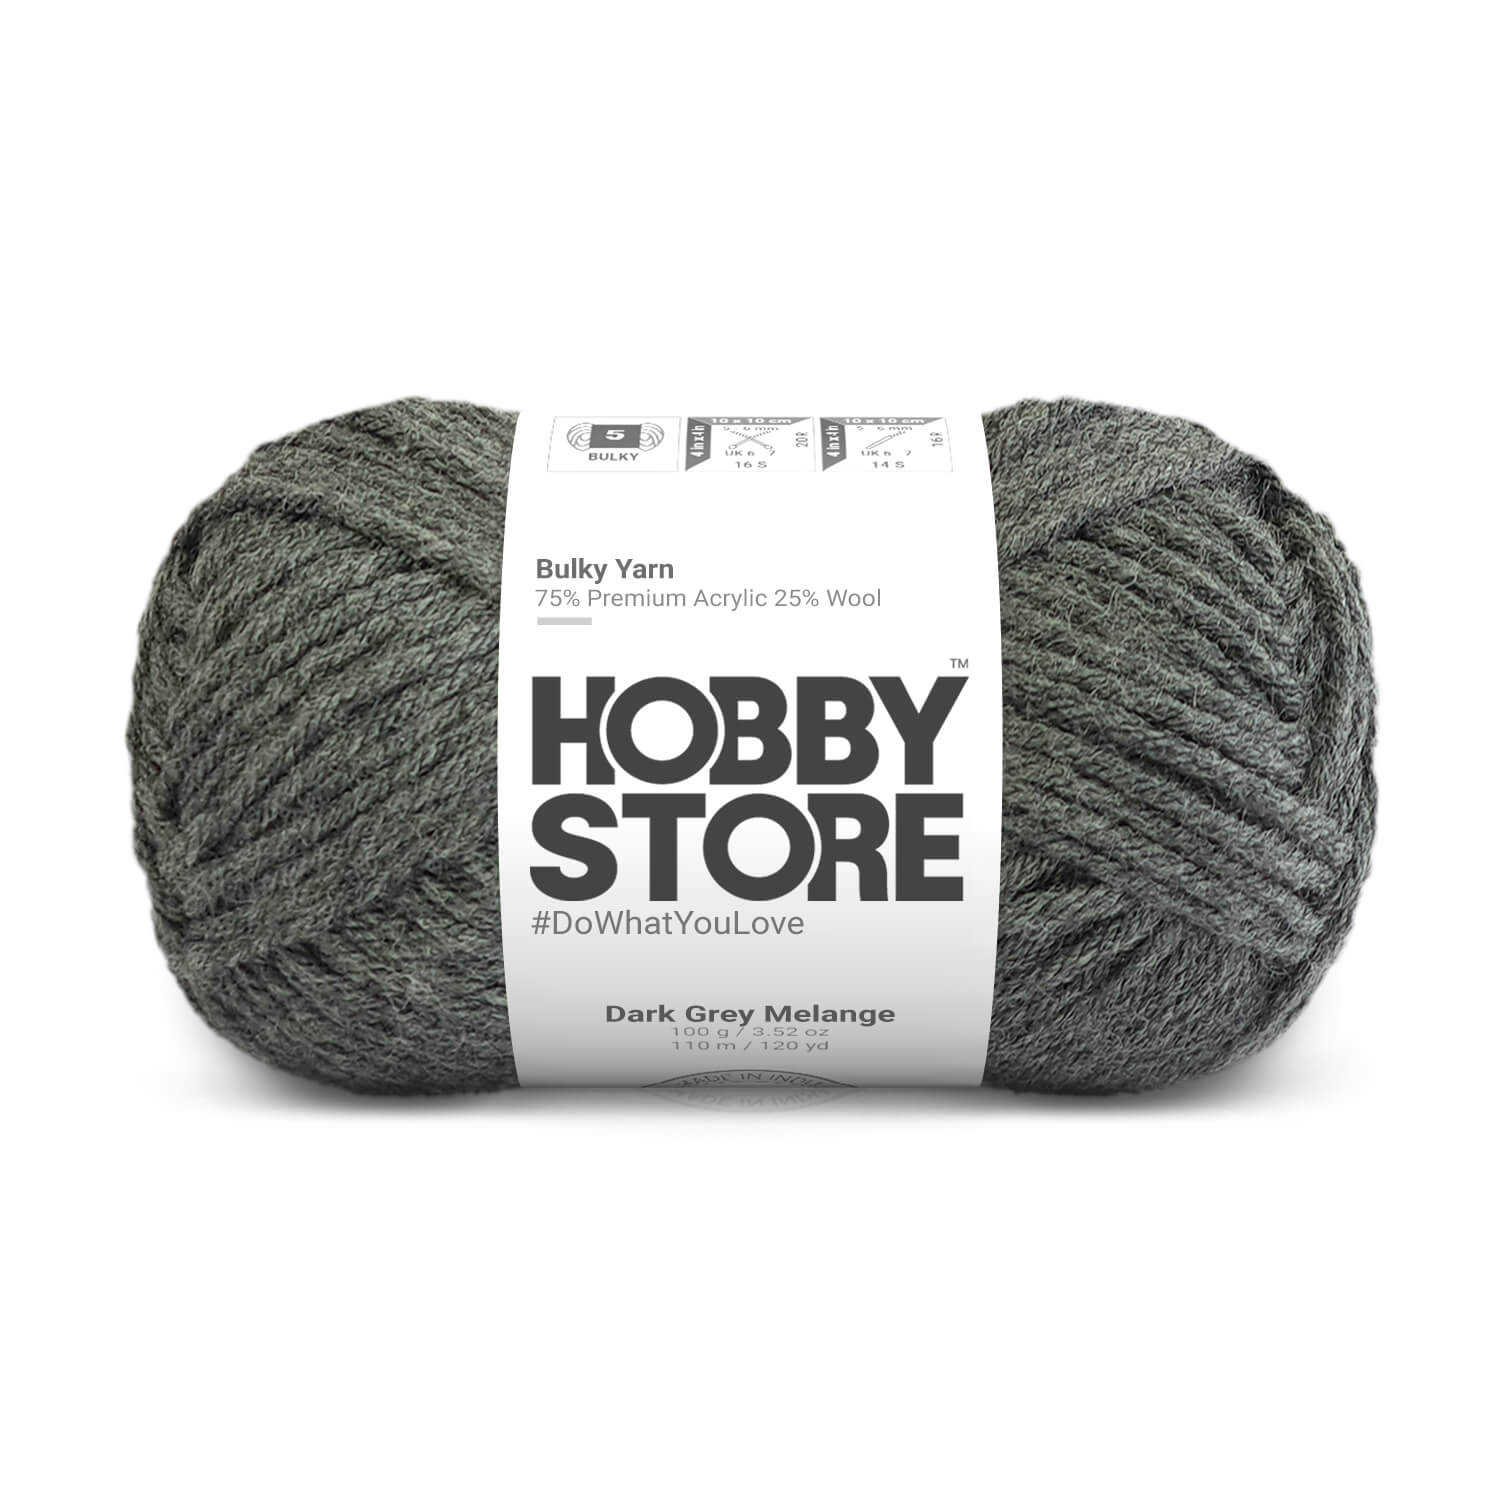 Bulky Yarn by Hobby Store - Dark Grey Melange 6018